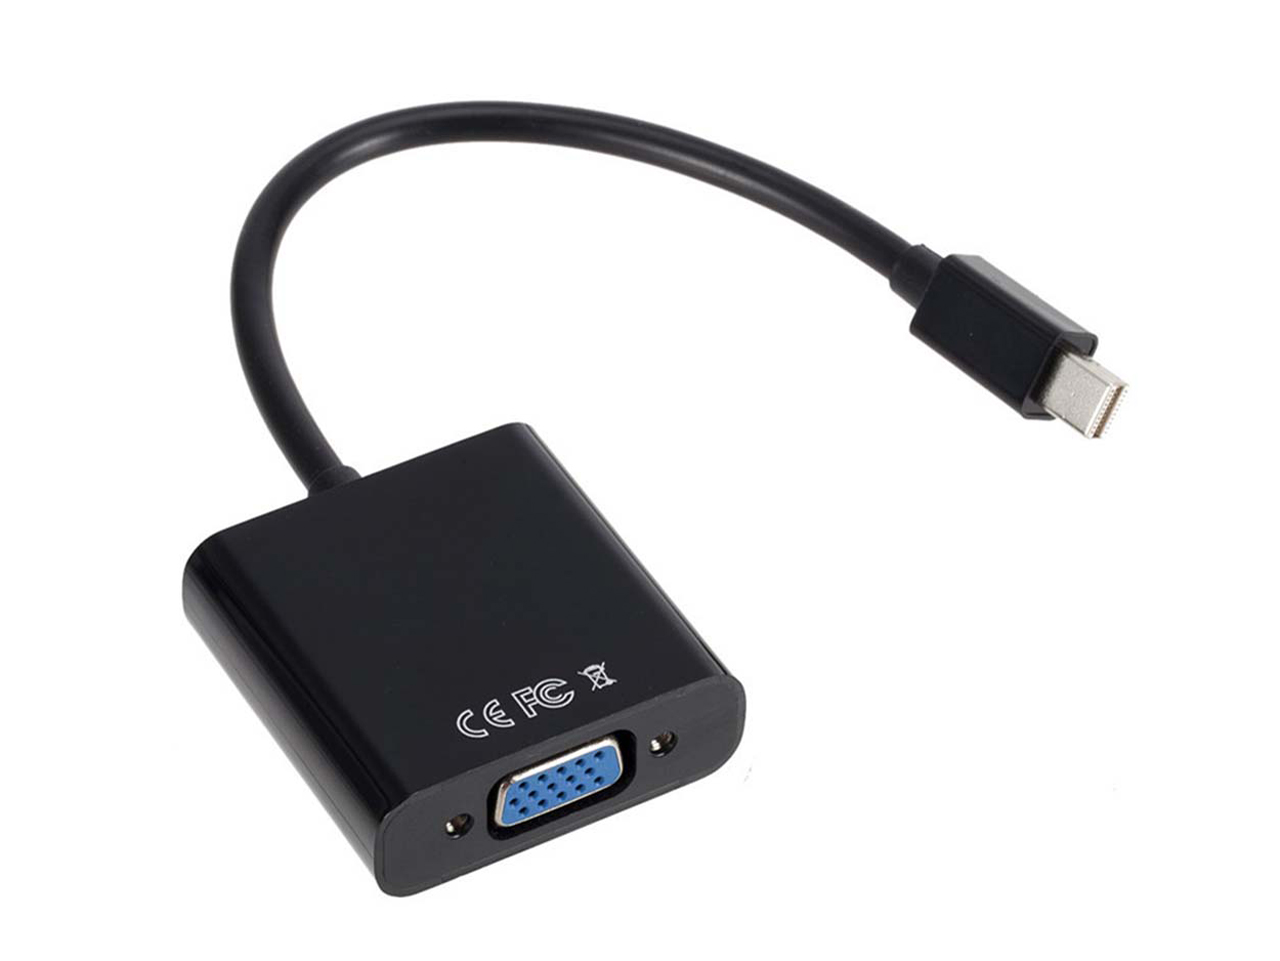 Mini Displayport DP vers HDMI câble adaptateur pour Apple MacBook